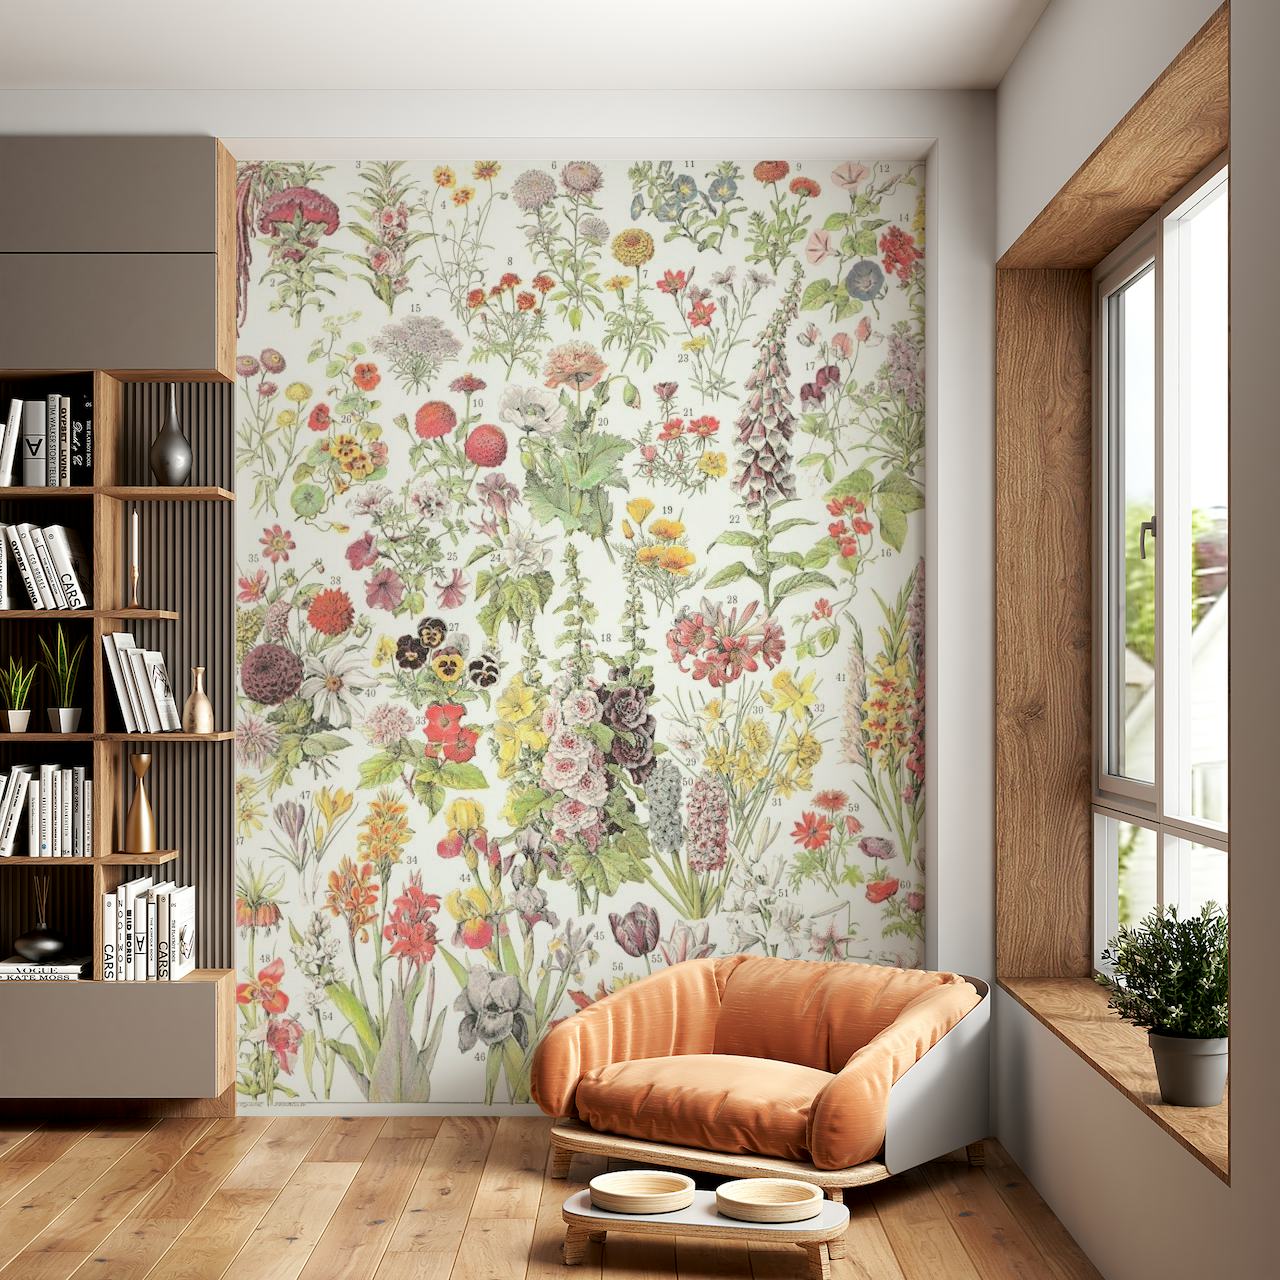 Fleurs - Encyclopedie Larousse - ASTER wallpaper